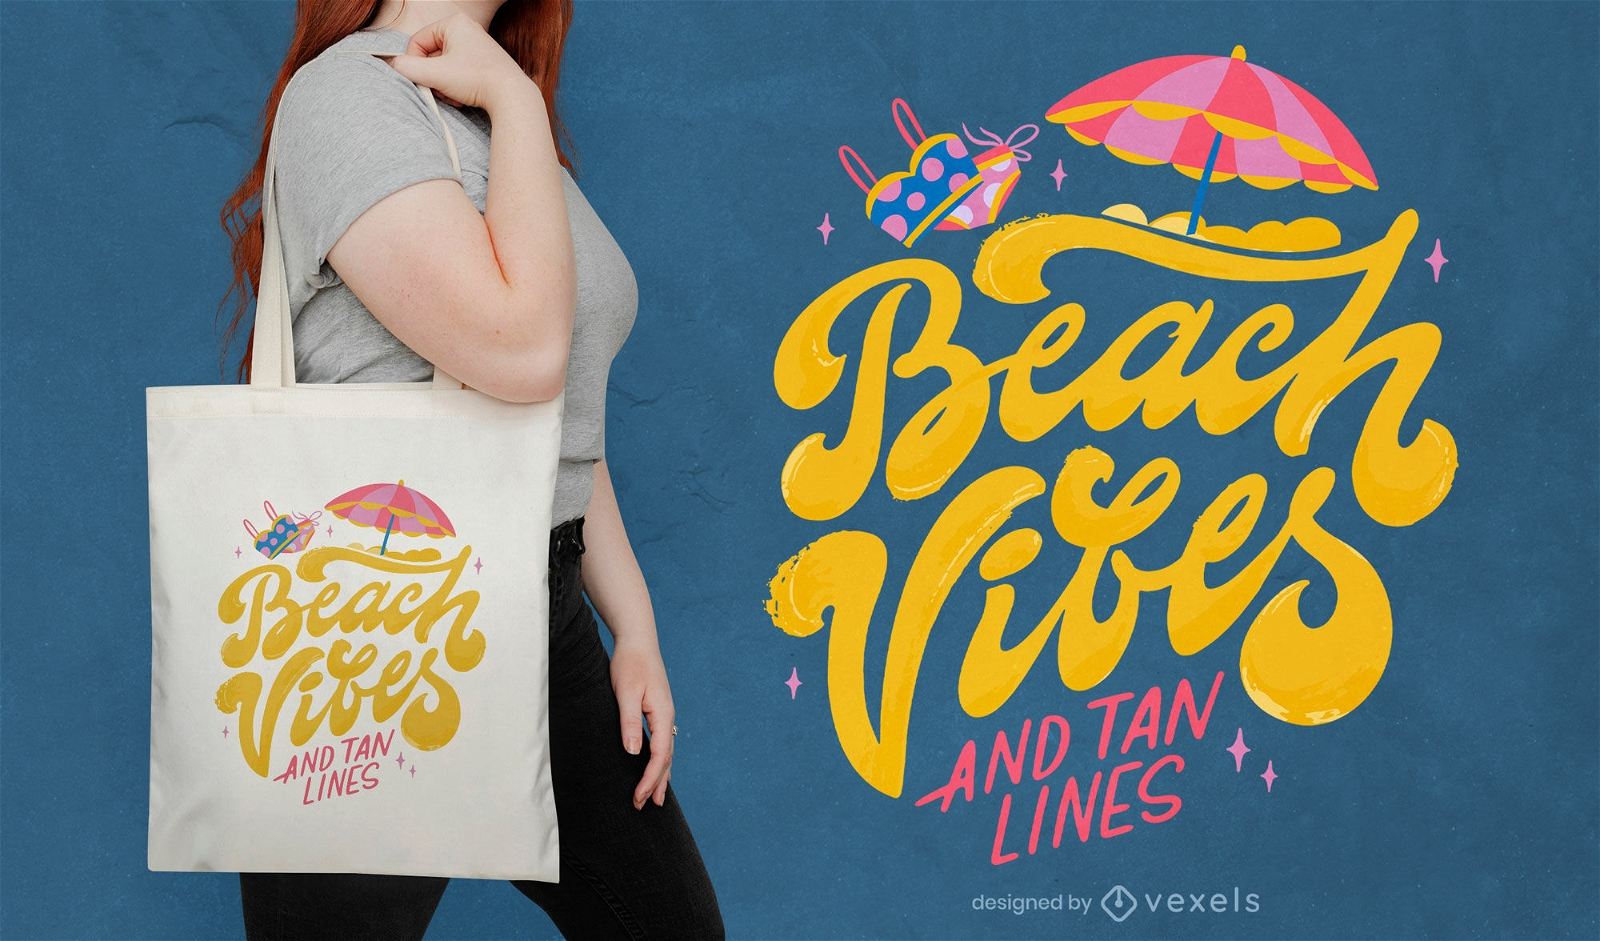 Beach vibes tan lines tote bag design